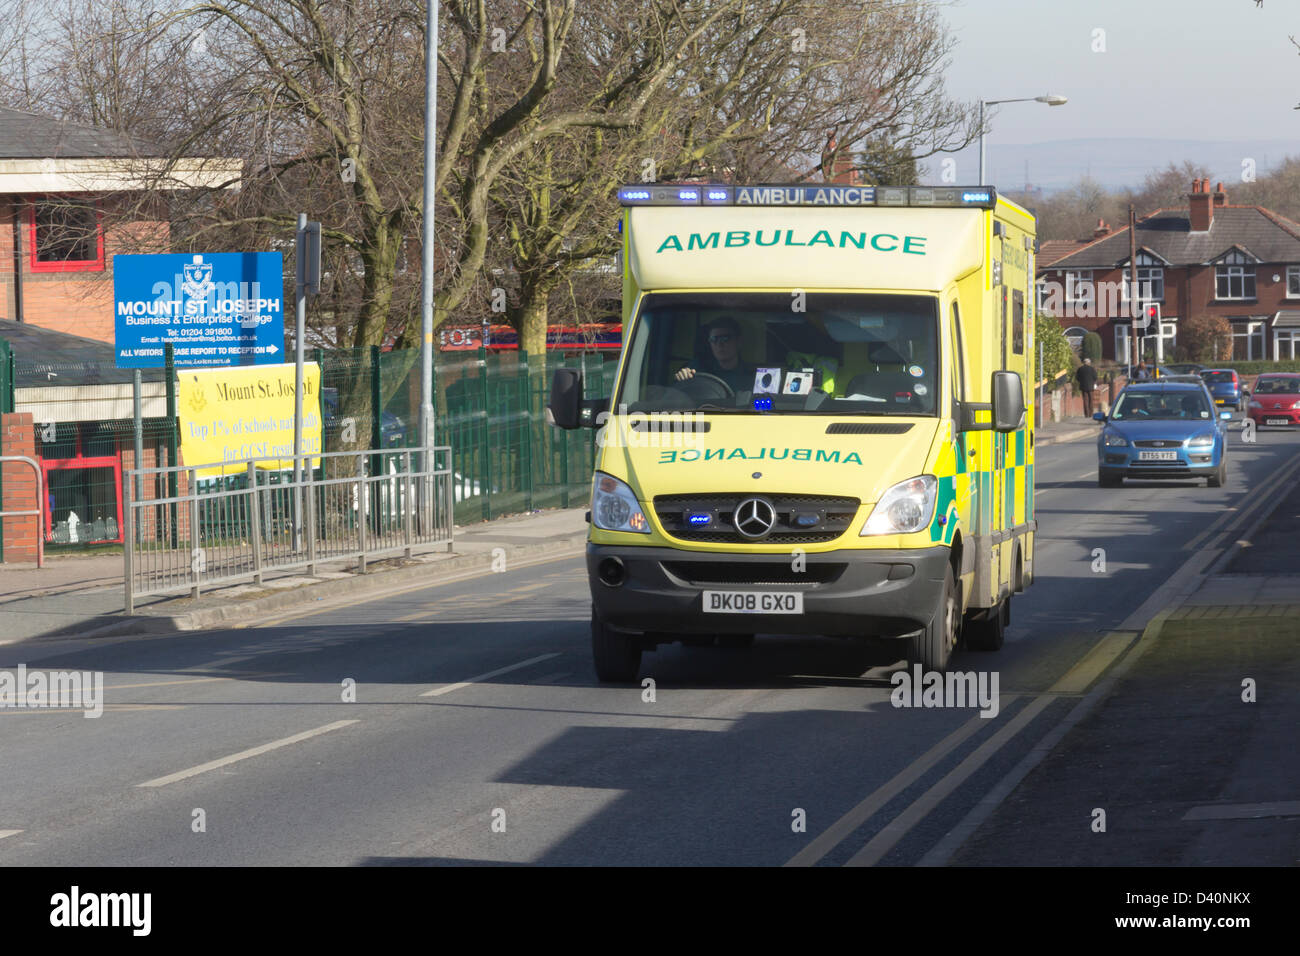 Royal Bolton Hospital,Lancashire. 28th February 2013. Ambulance  with blue flashing lights on Minerva Road approaching the Royal Bolton Hospital. Stock Photo